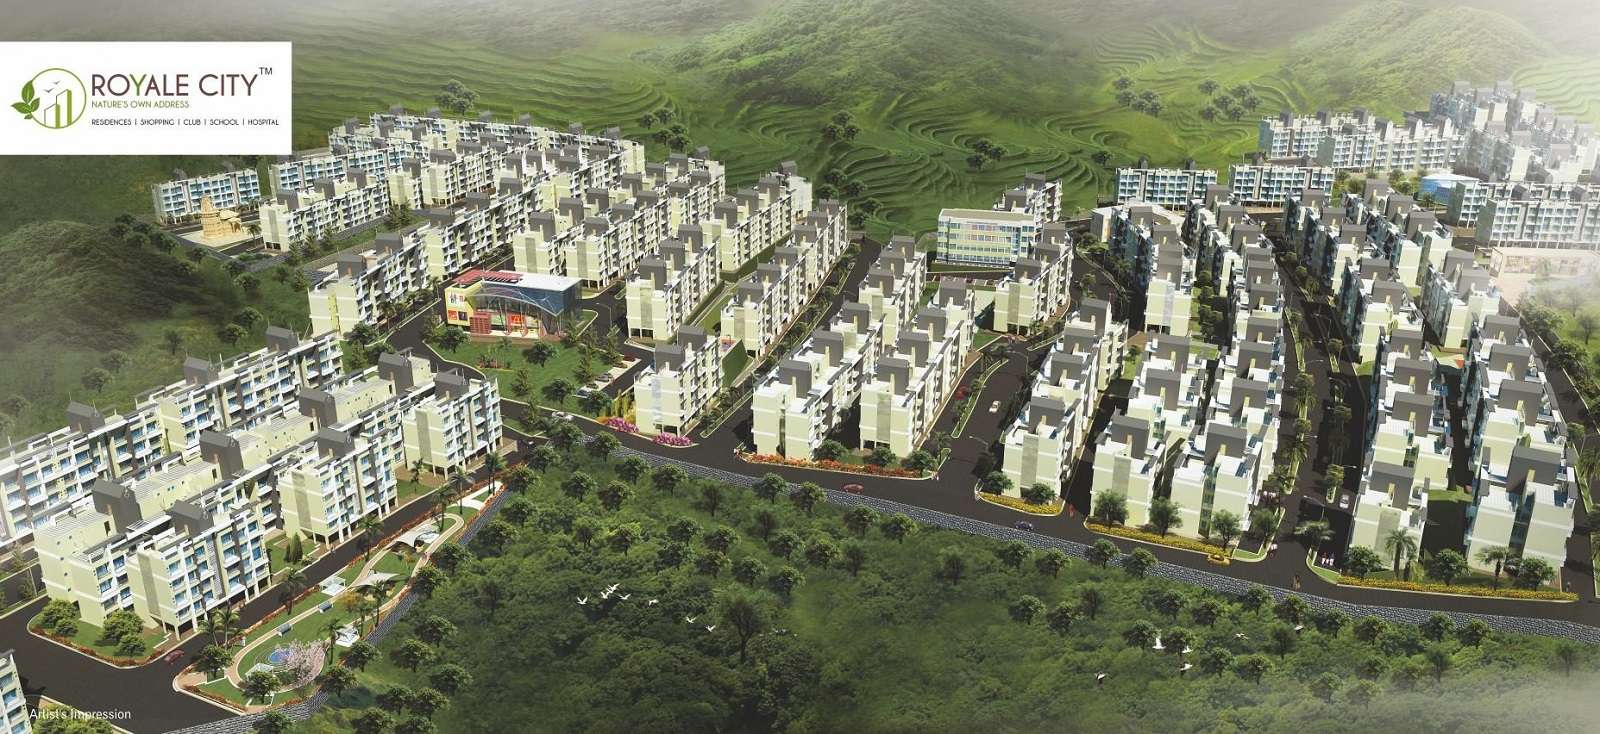 royale city asangaon project tower view1 2020